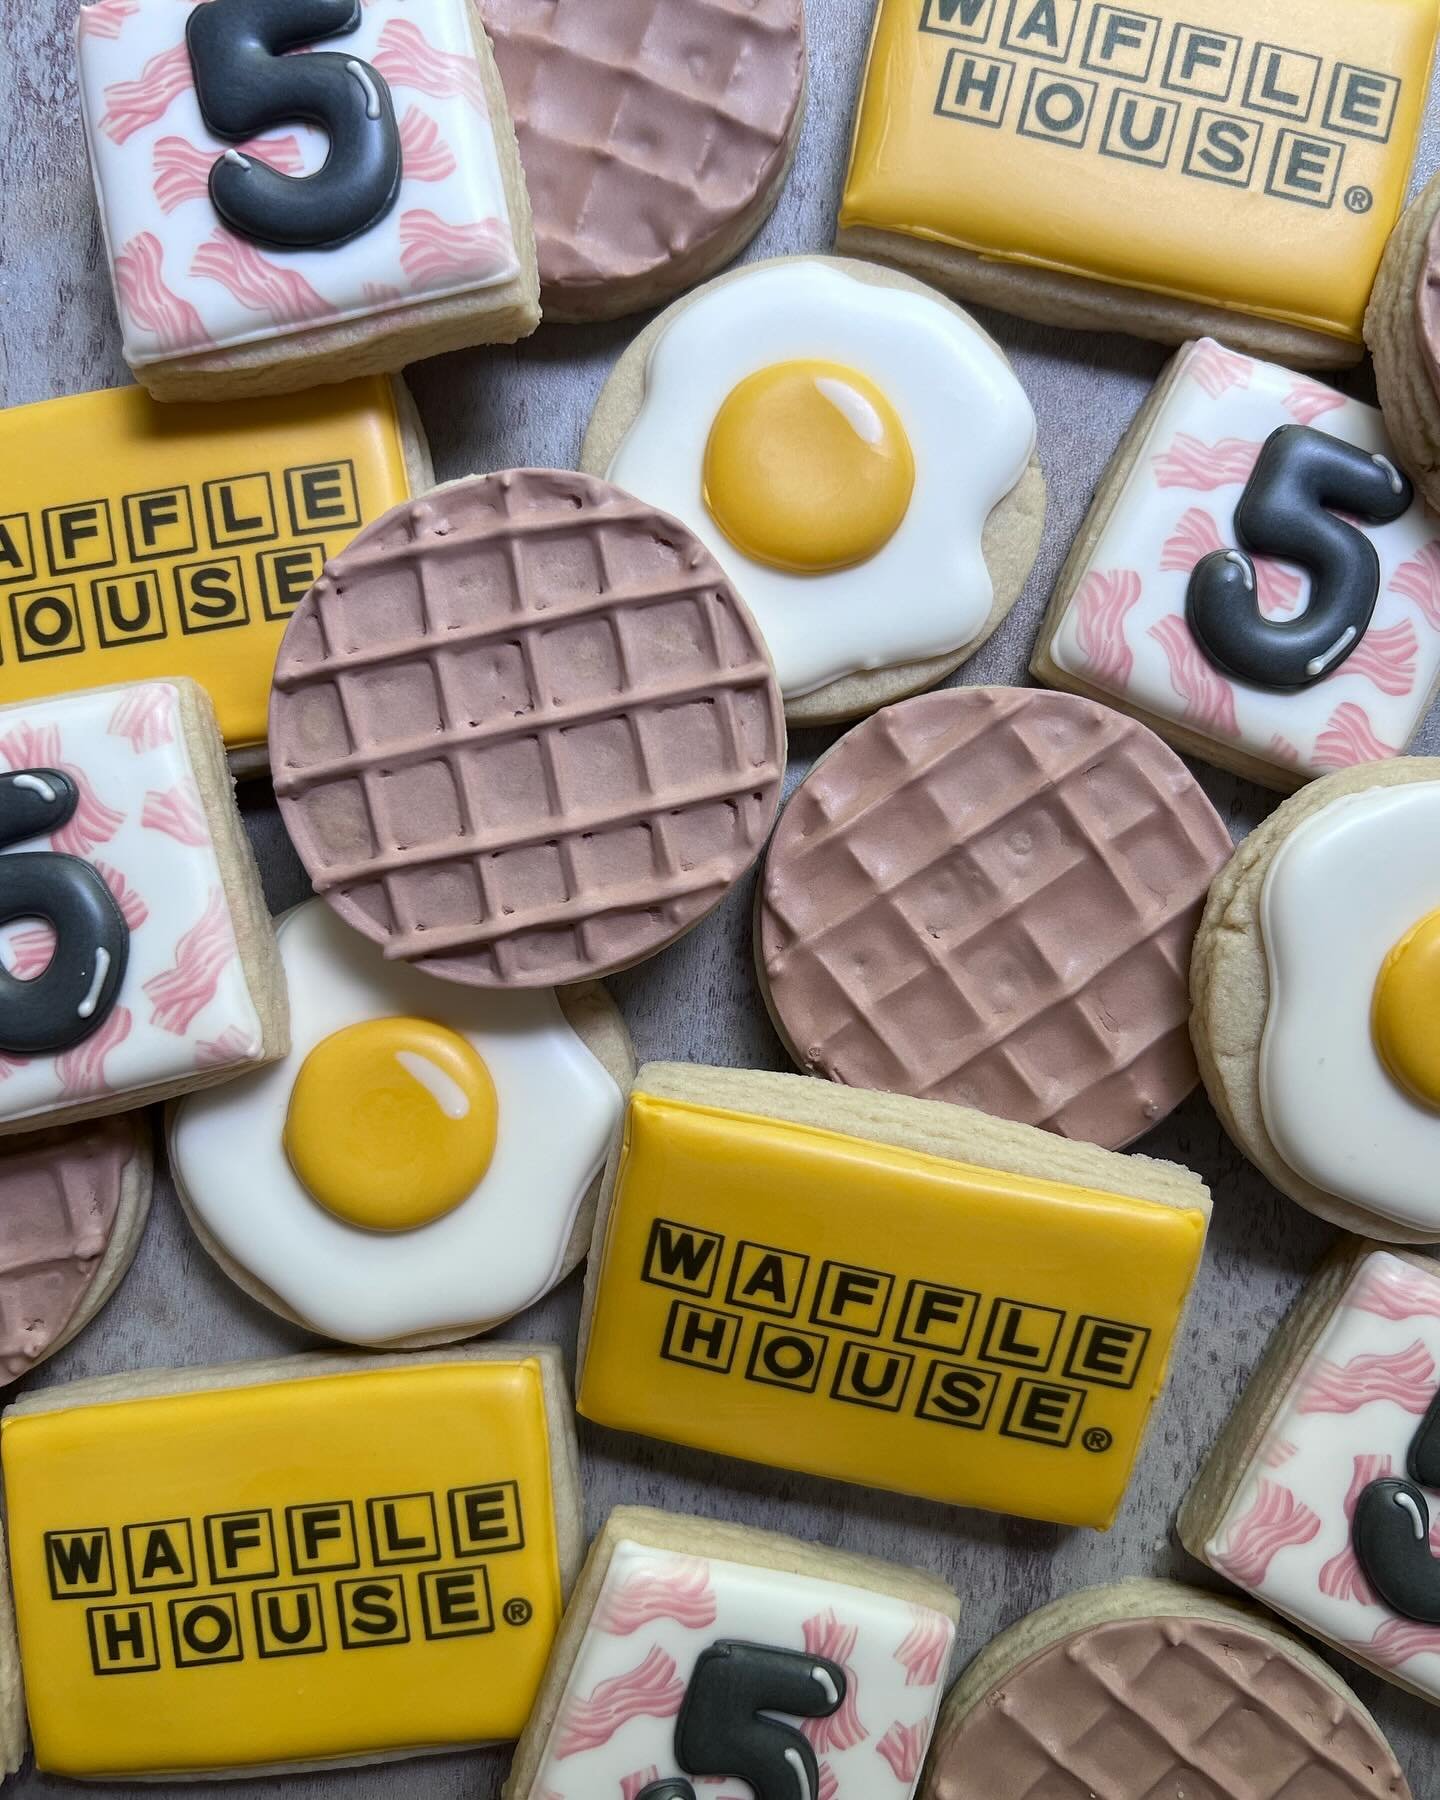 A Waffle House birthday? Say less! 🧇🍳